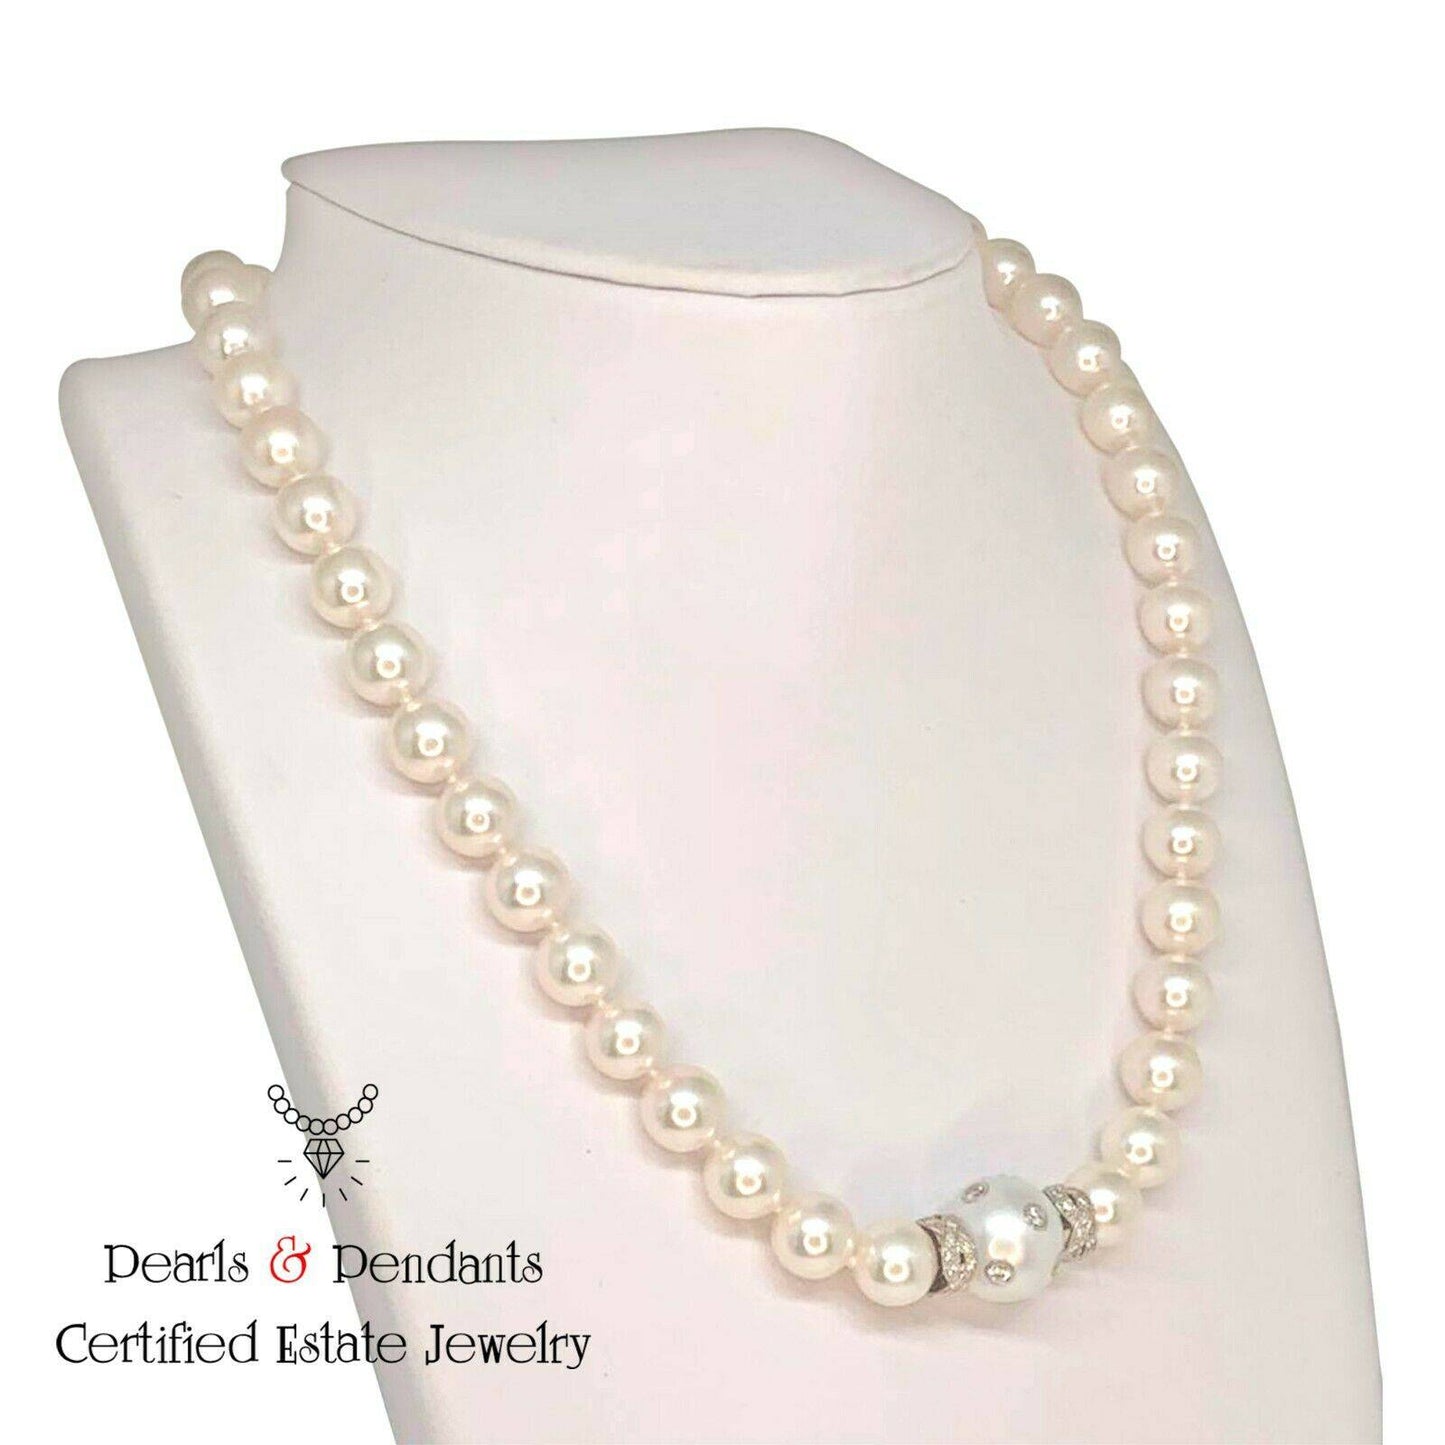 Diamond South Sea Akoya Pearl Necklace 14k Gold 13 mm 18" Certified $12,950 921560 - Certified Estate Jewelry